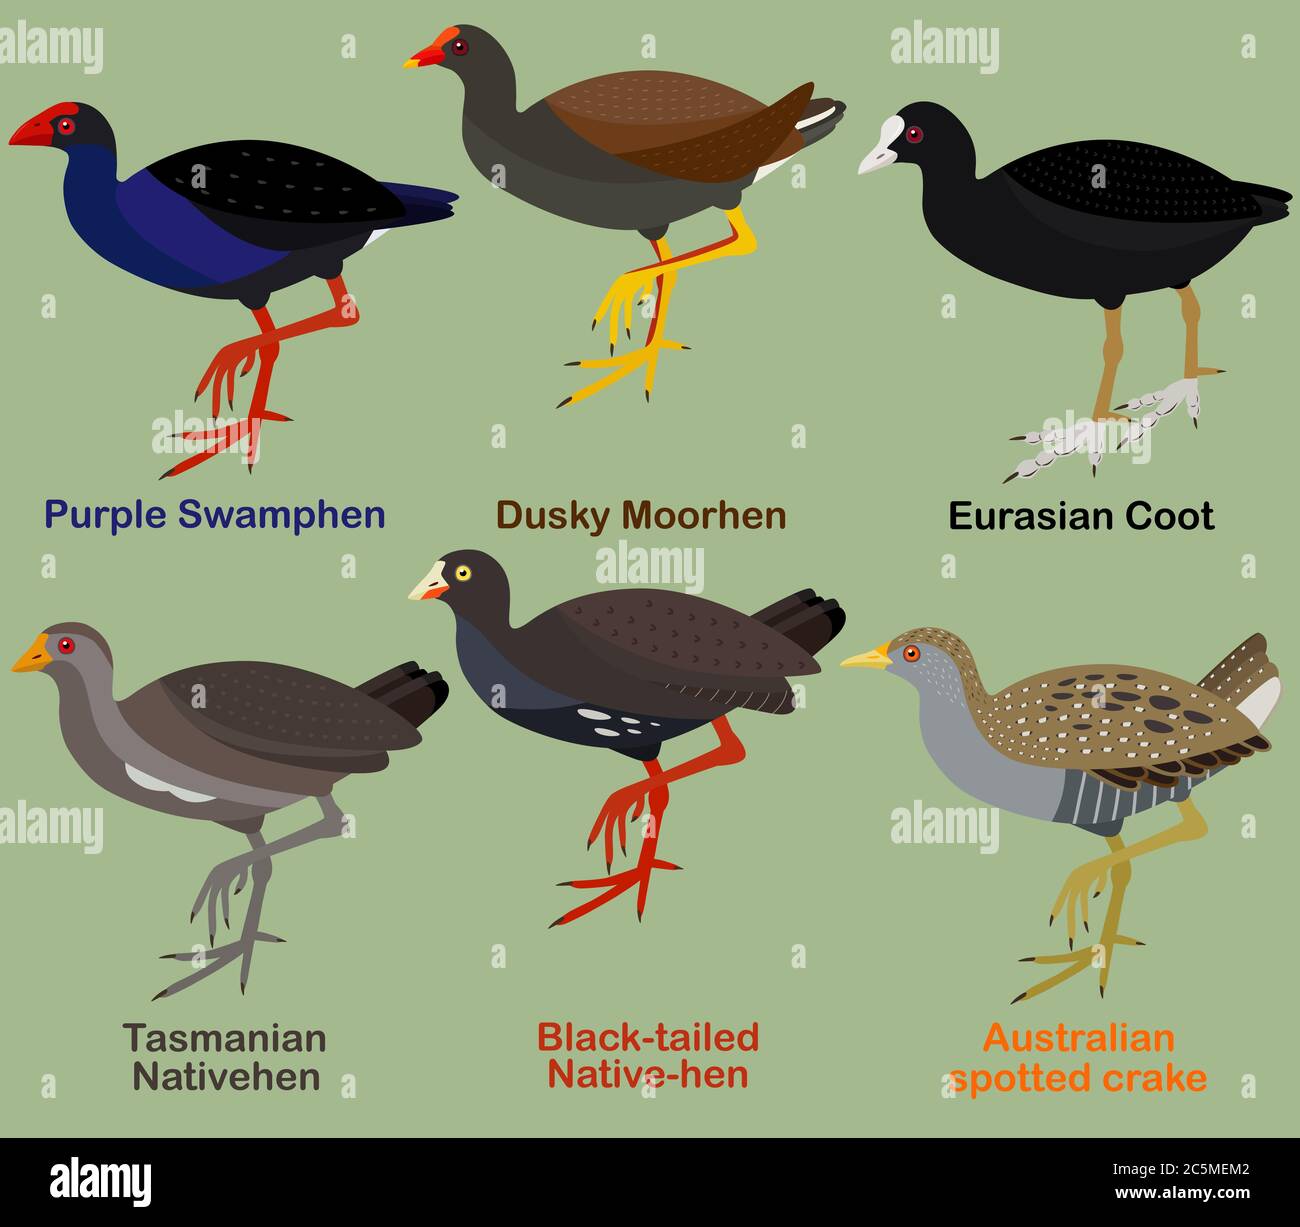 Cute bird vector illustration set, Purple Swamphen, Dusky moorhen, Coot, Native-hen, Crake, Colorful seabird cartoon collection Stock Vector